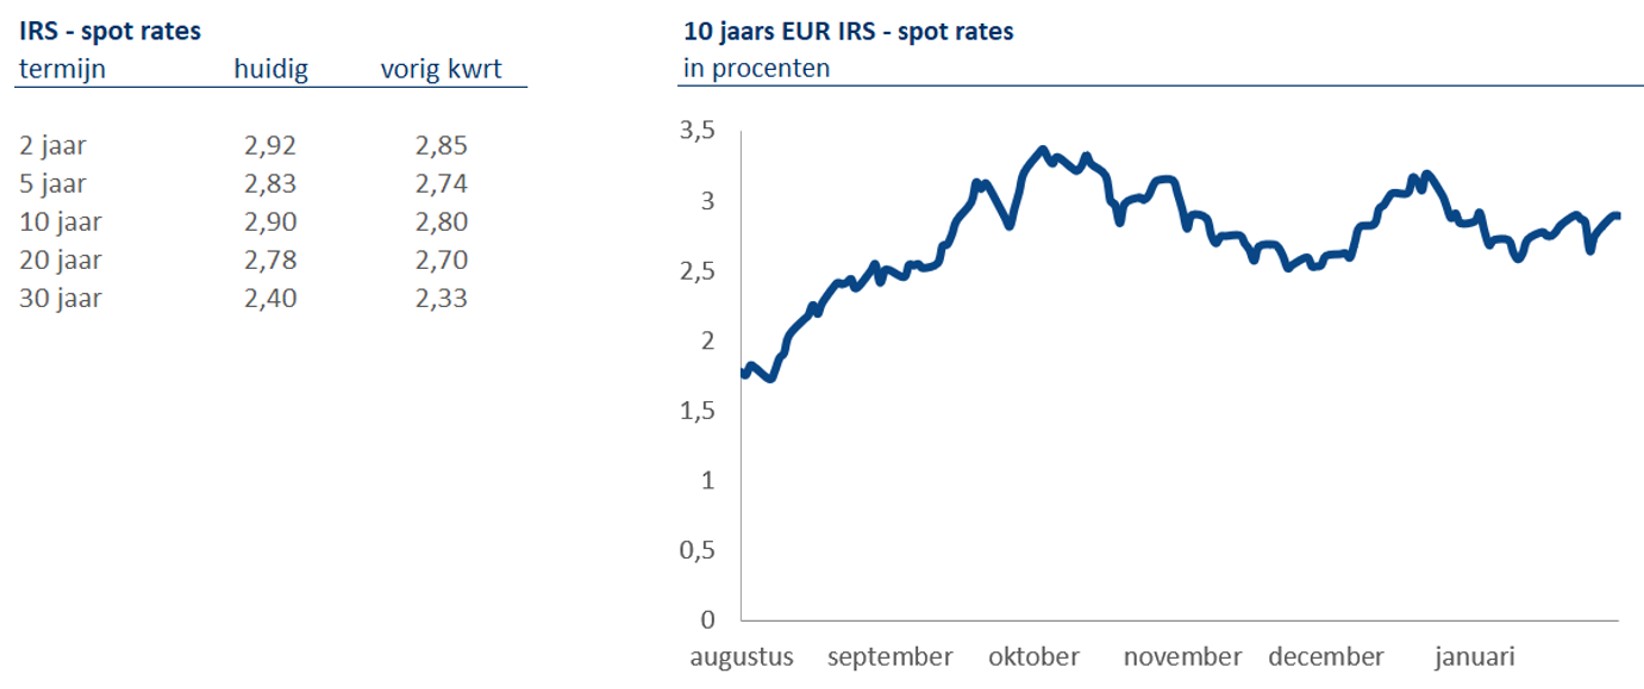 10 jaars EUR IRS - spot rates